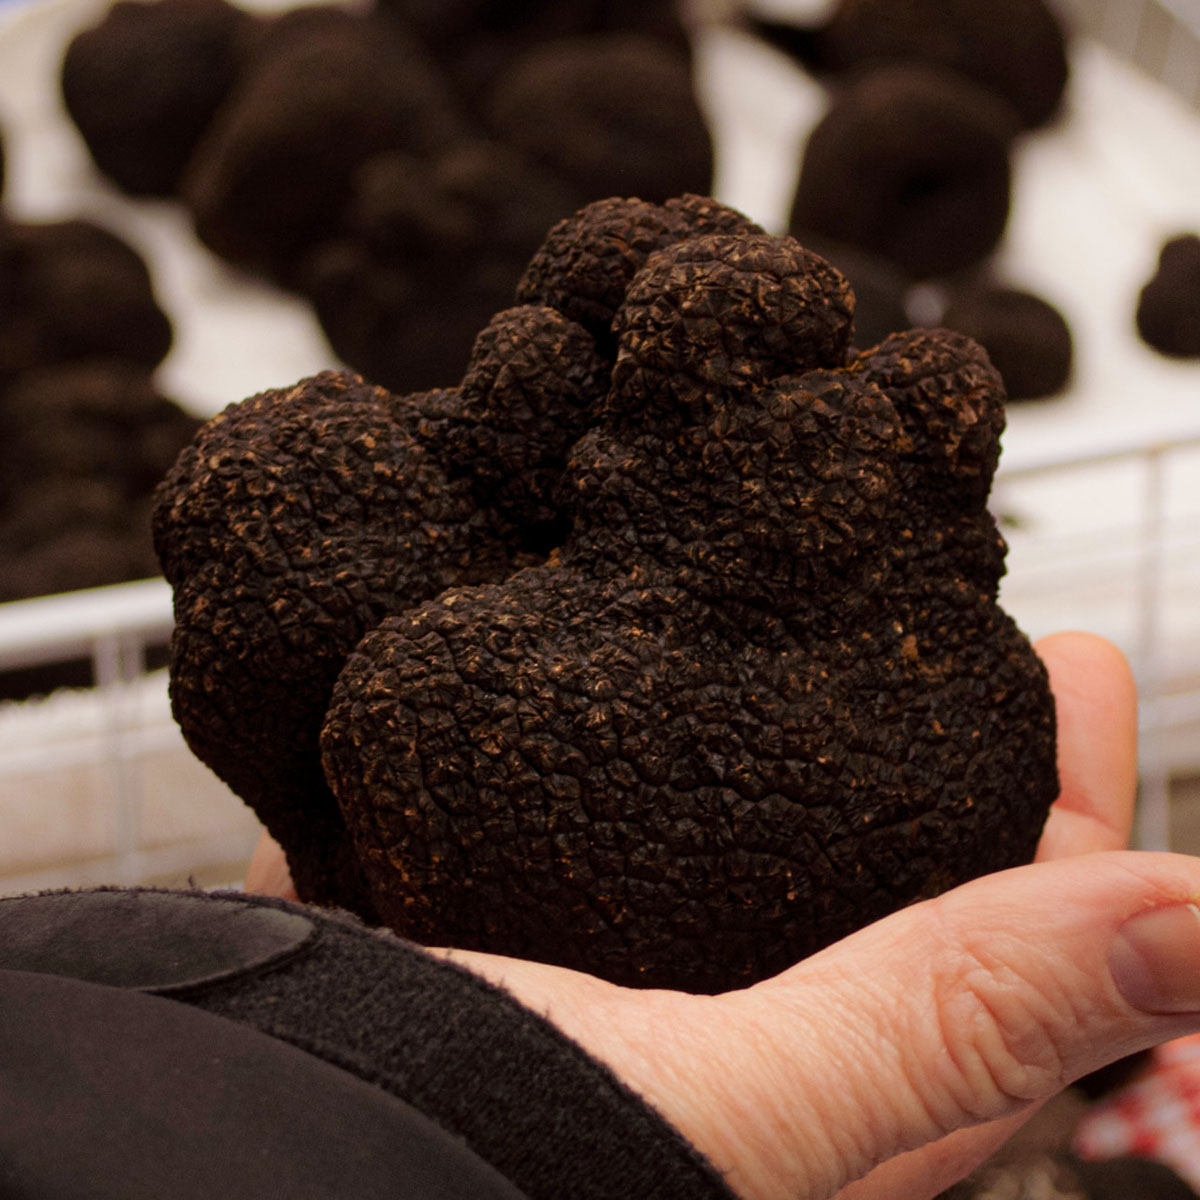 Millgrove Truffles - extra large truffle